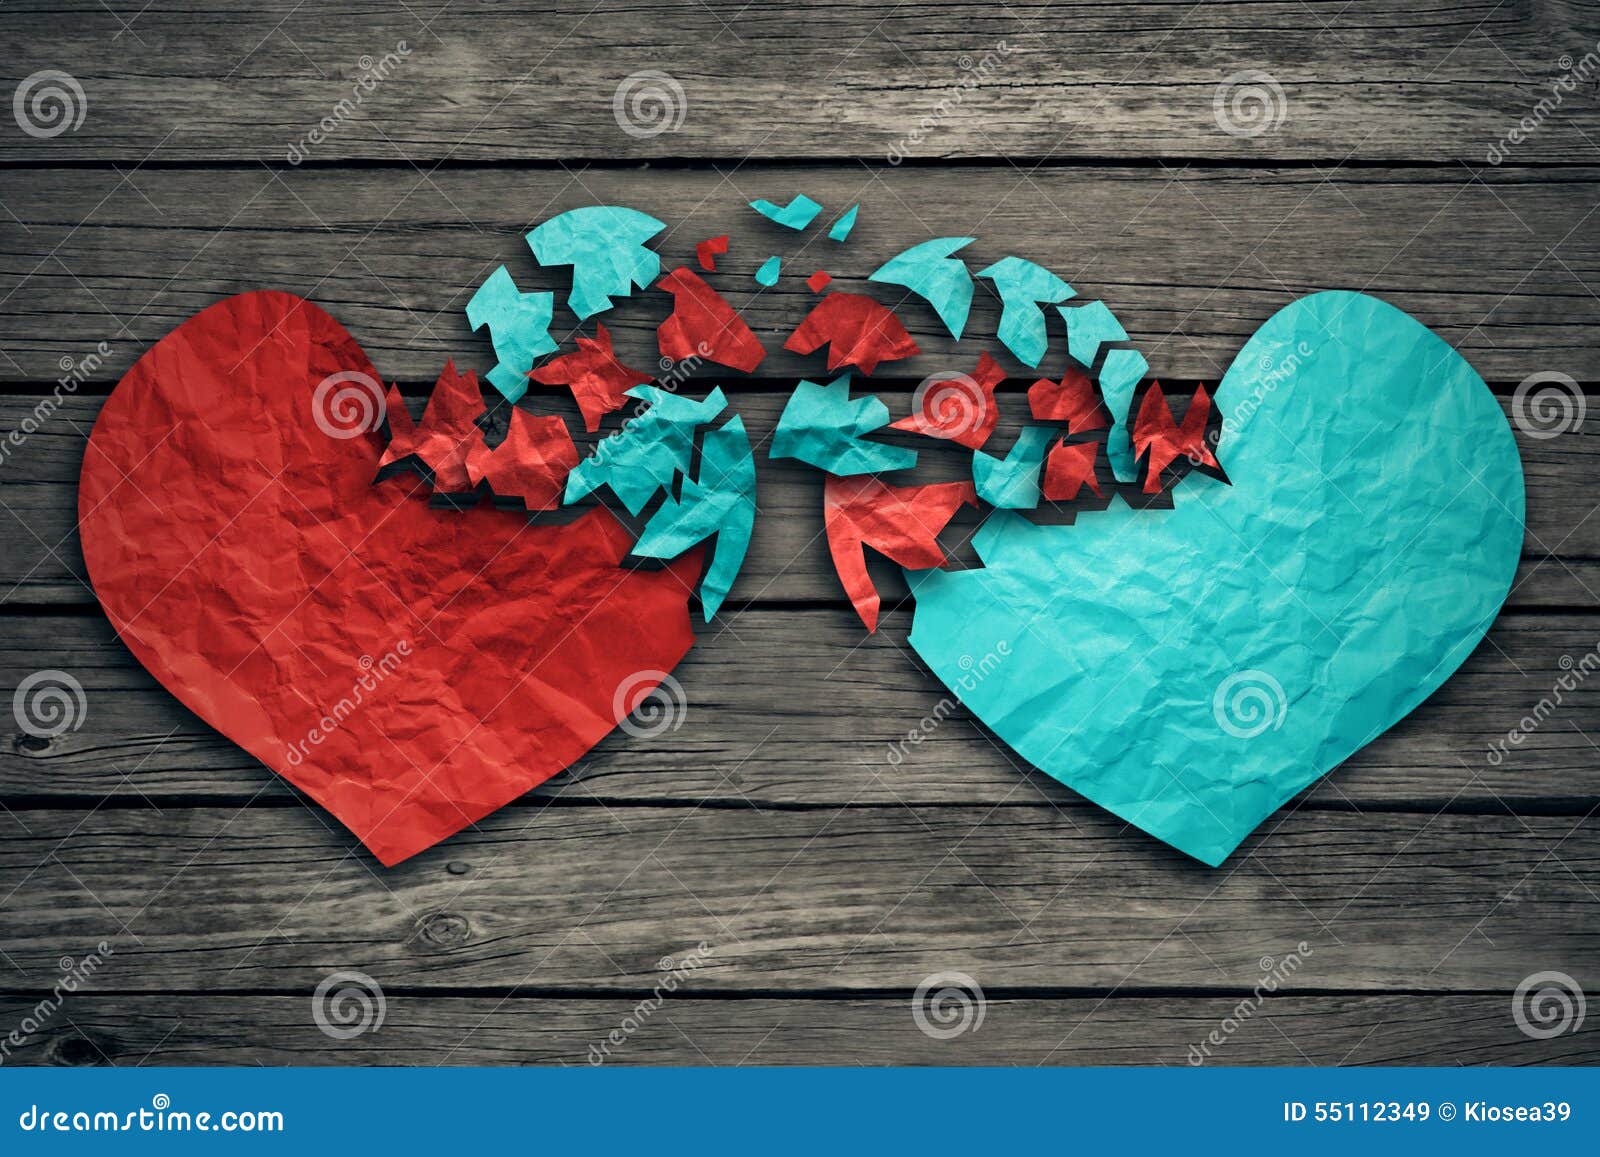 romantic relationship concept two hearts exchange feelings